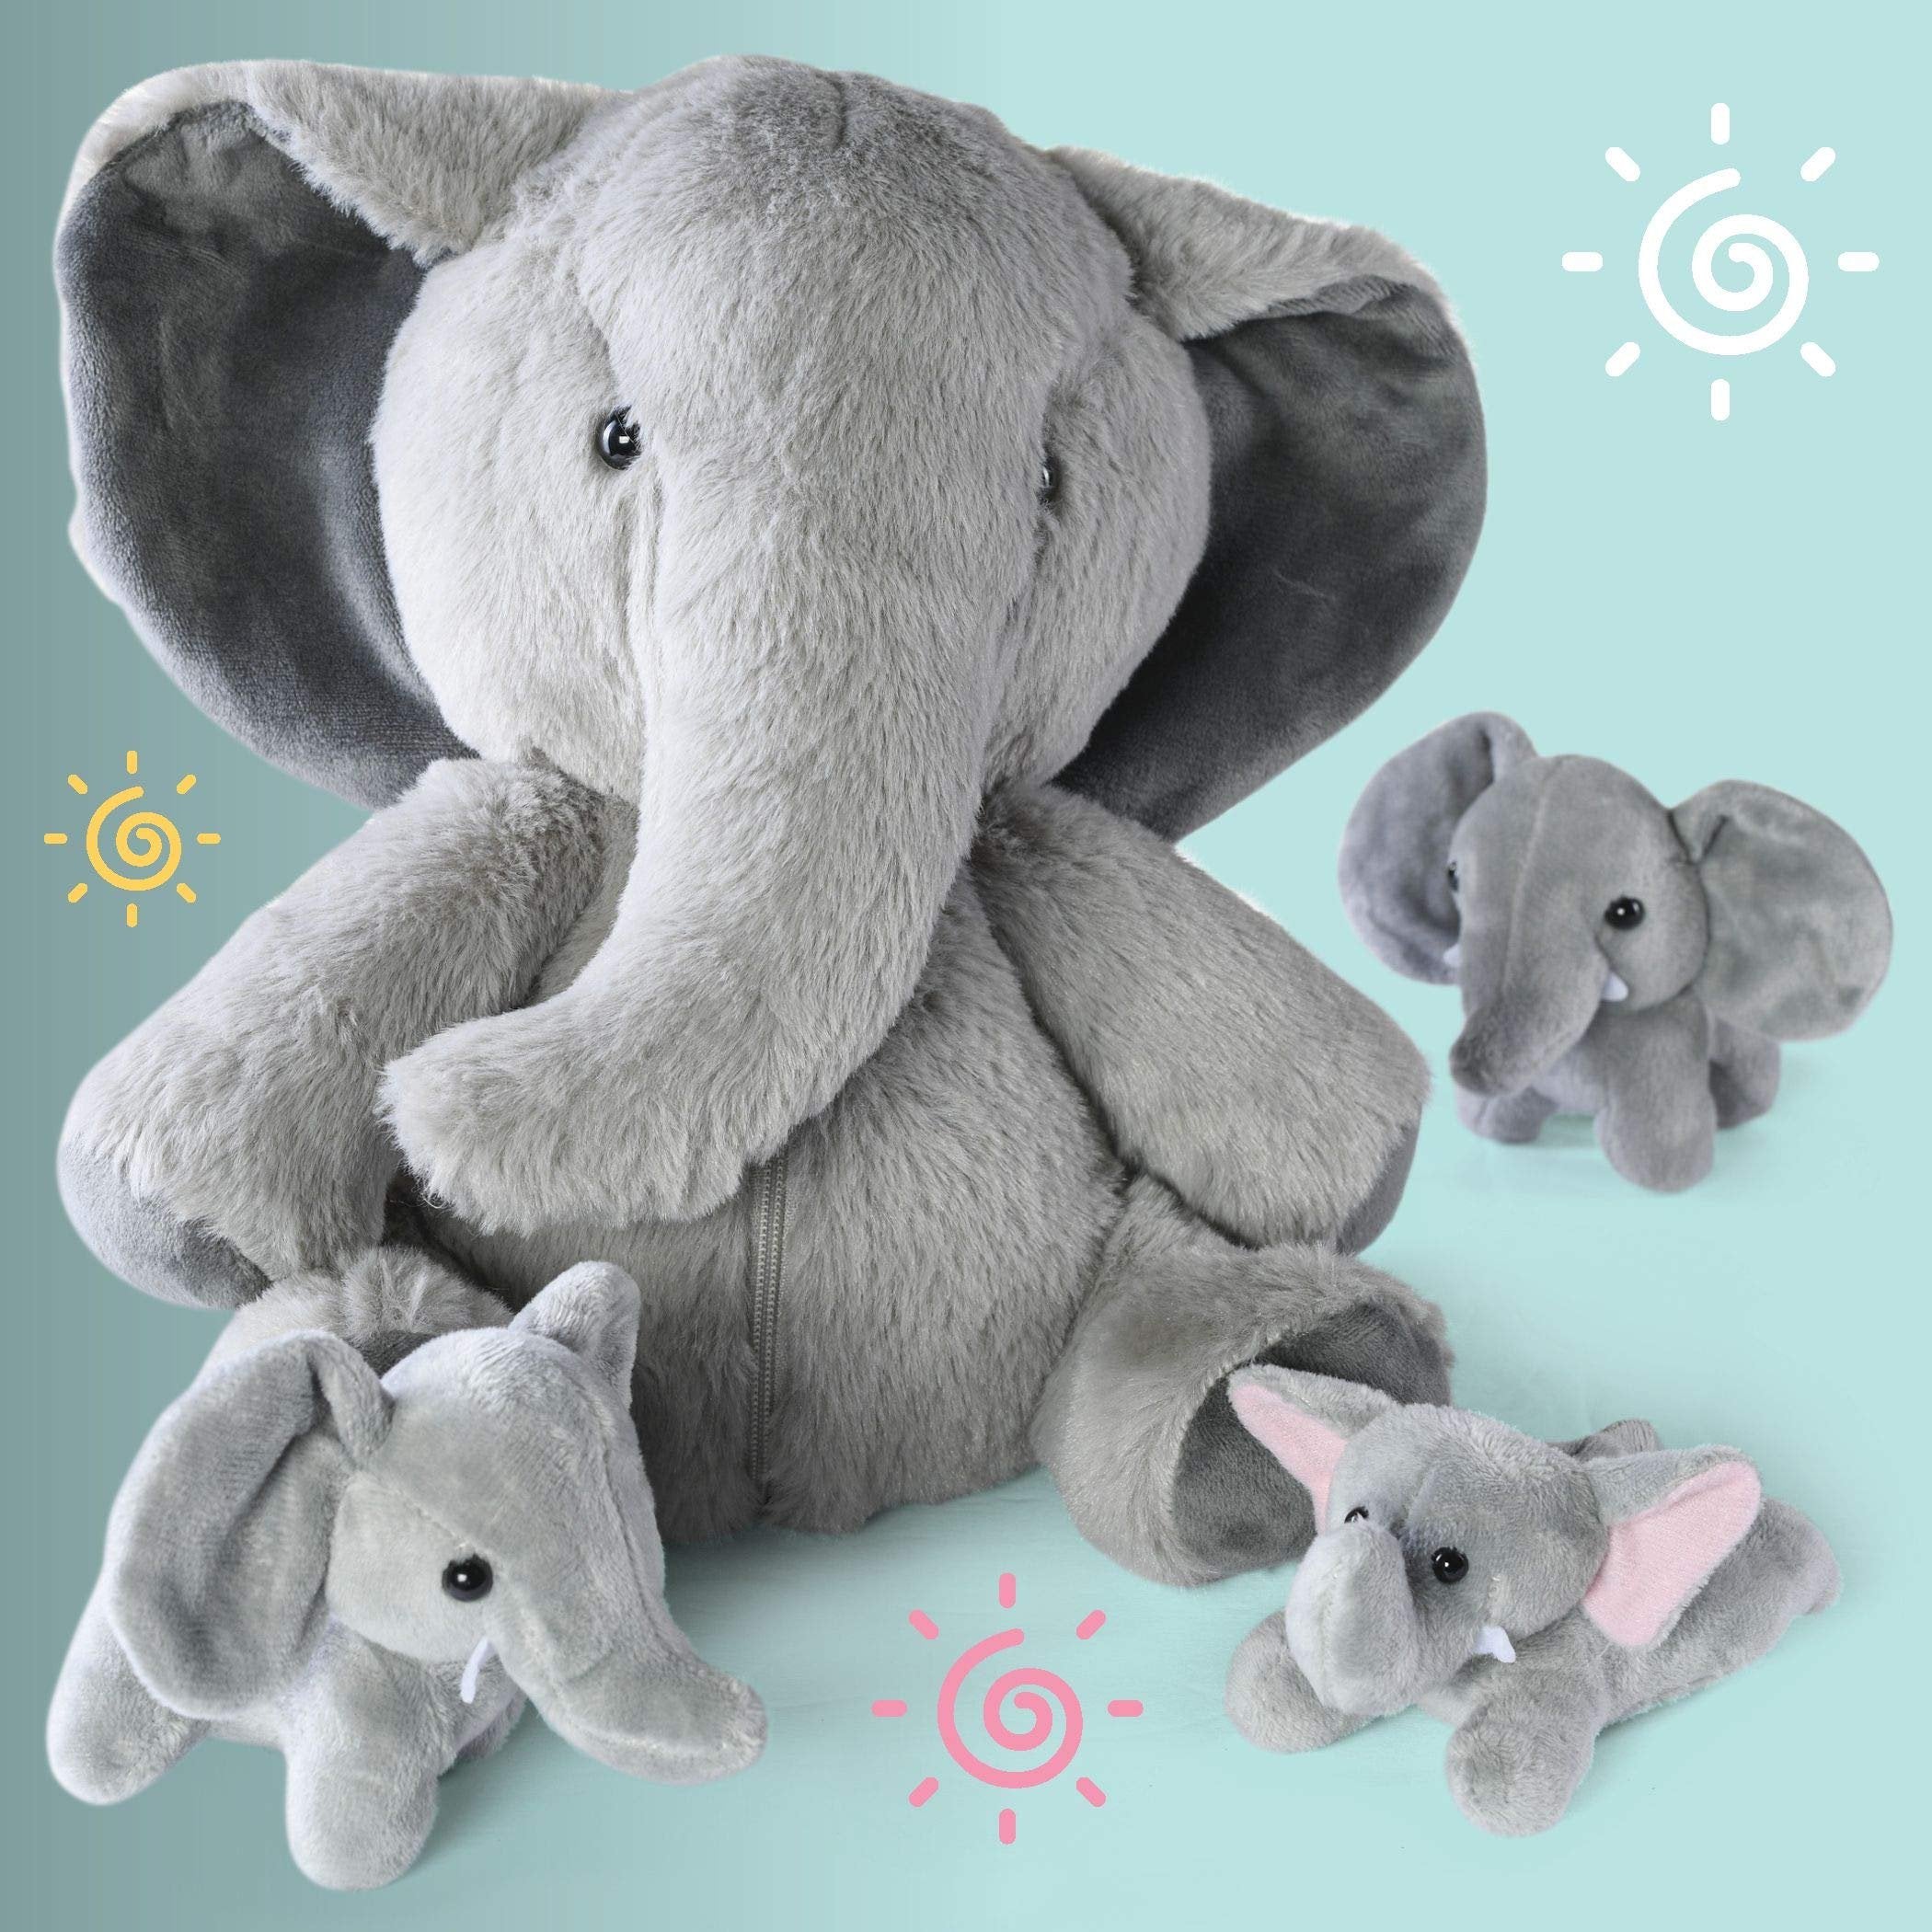 Prextex Plush Elephant Toys - Elephant Stuffed Animal with 3 Elephant Baby Stuffed Animals - Big Elephant Zippers 3 Little Plush Baby Elephant - Toys for Kids 3+ Years - Great Gift for Elephant Lovers